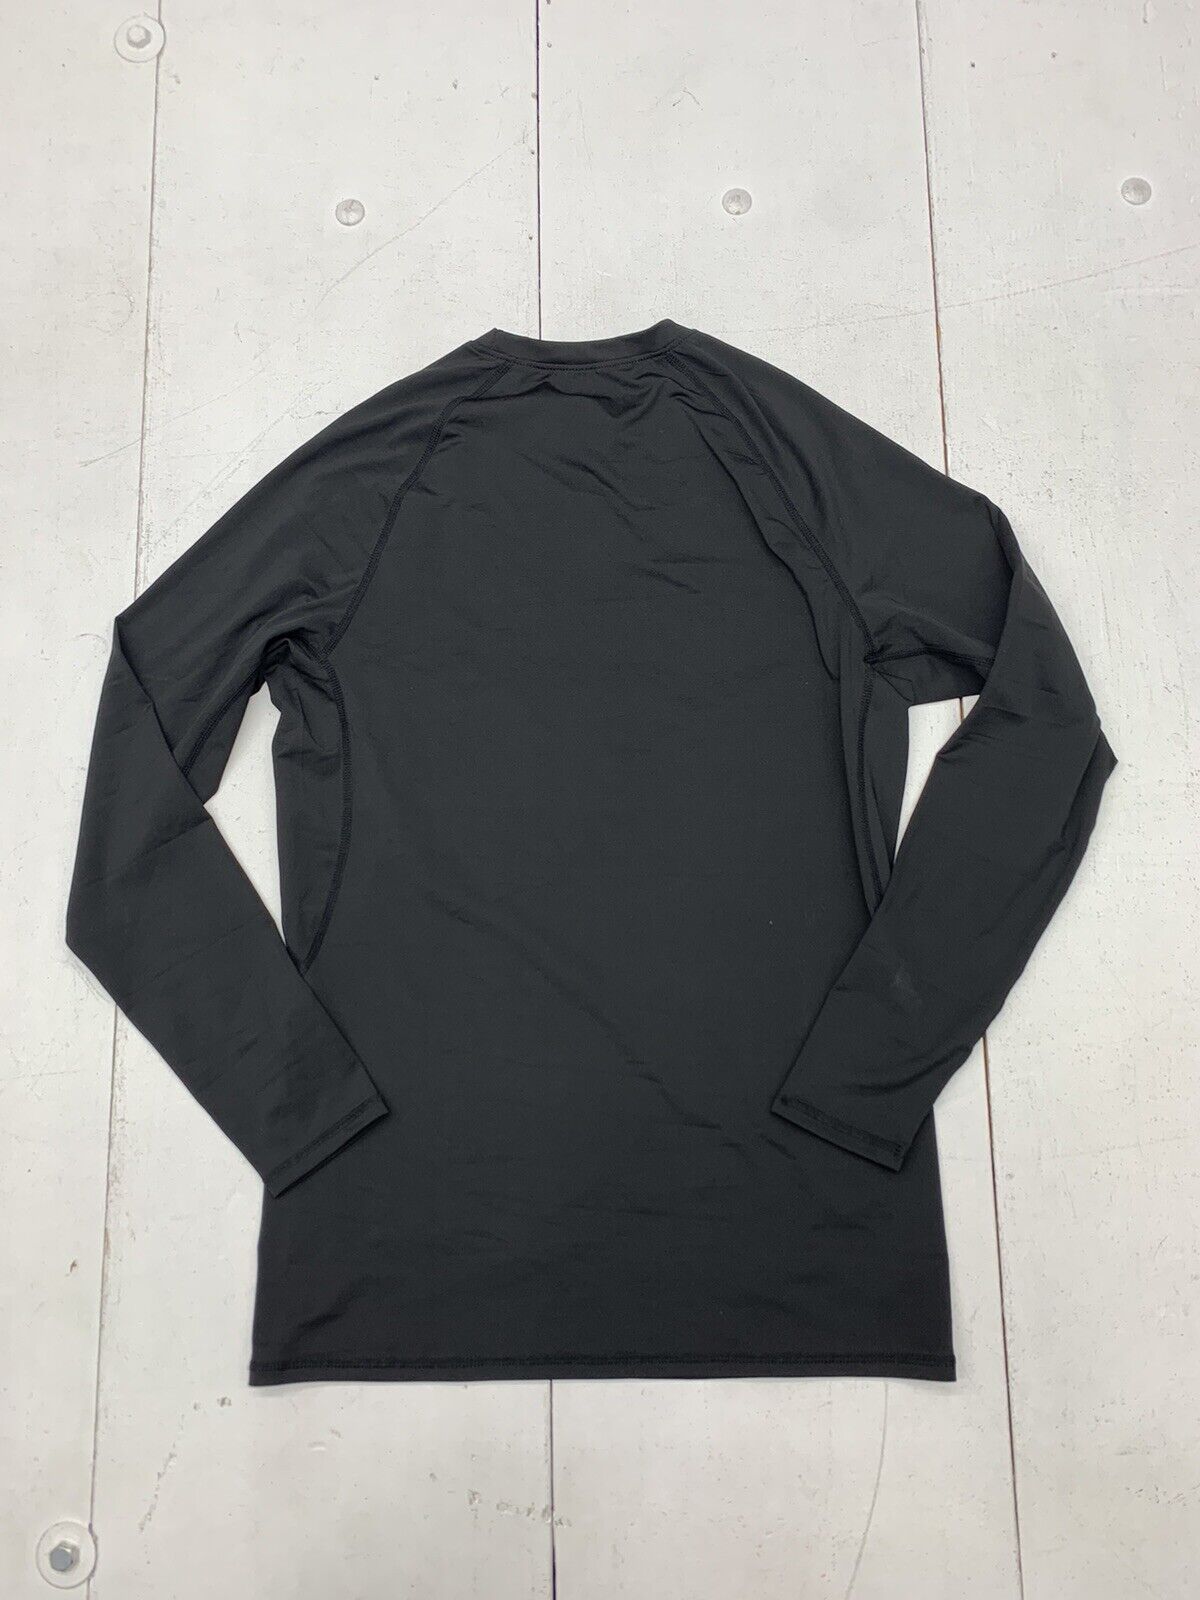 Hoplynn Womens Black Athletic Long Sleeve Shirt Size Large - beyond exchange